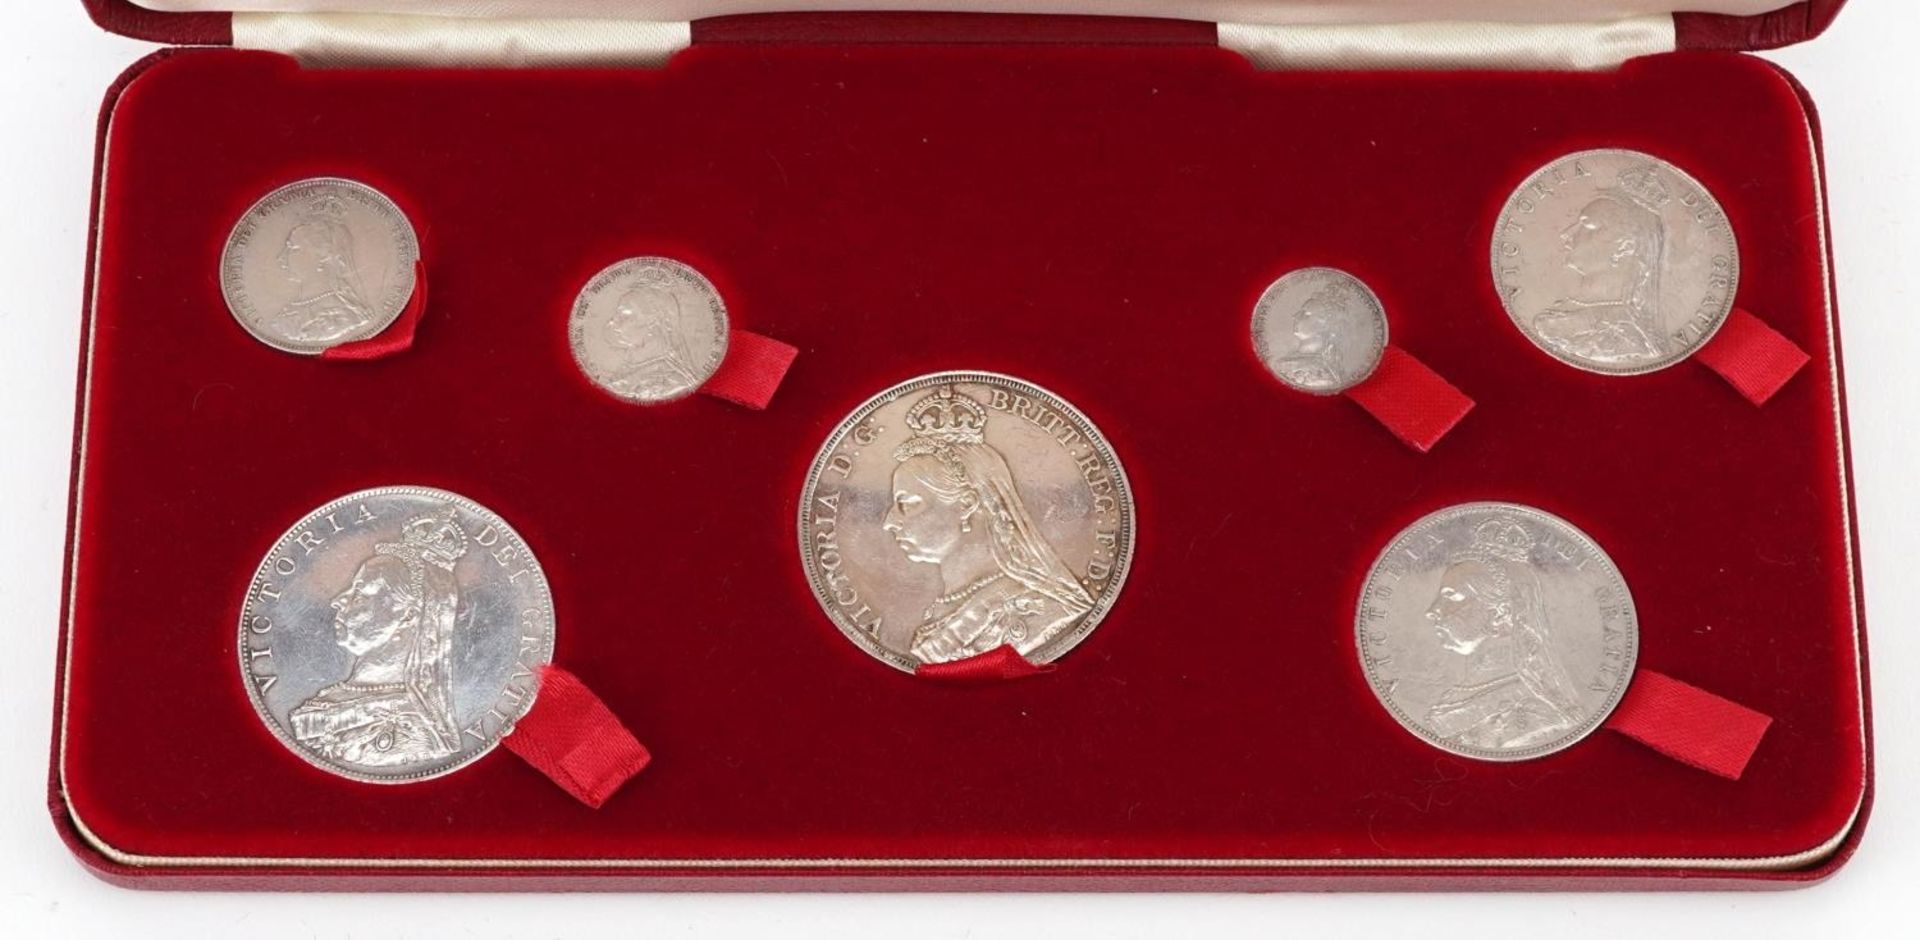 Queen Victoria Jubilee Head 1899 silver specimen coin set, comprising crown, half crown, double - Bild 5 aus 6